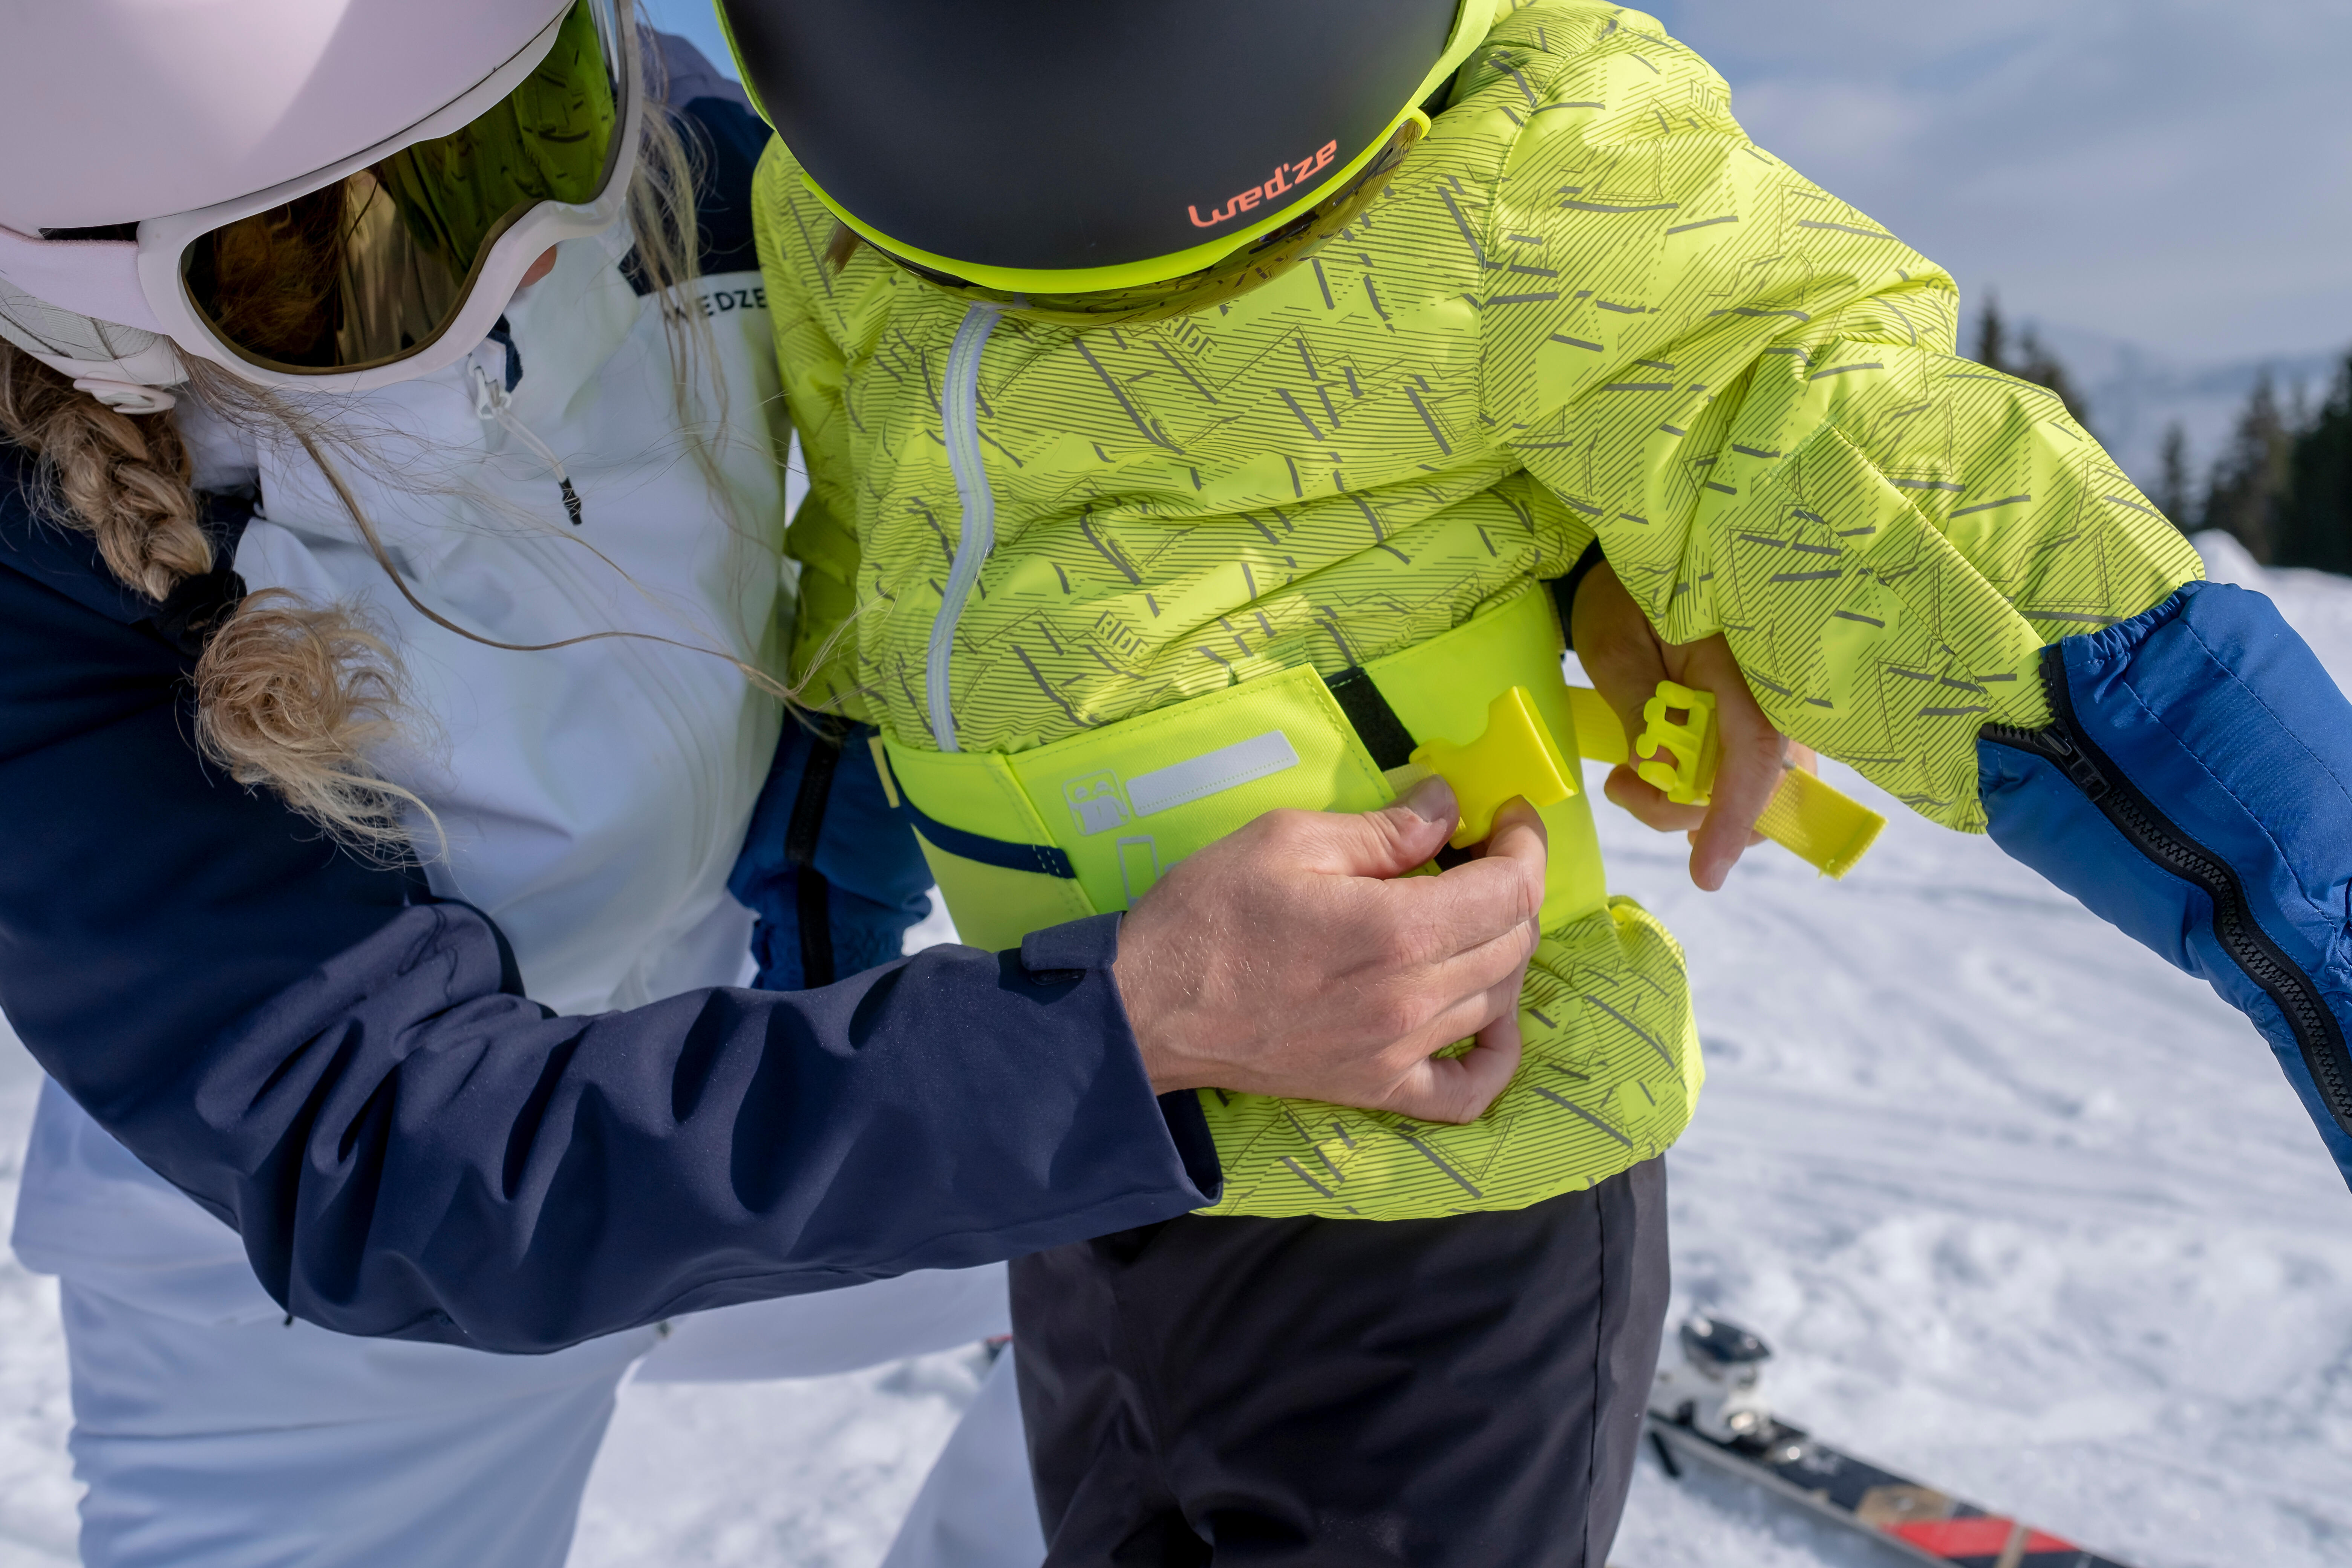 Harnais d'initiation au ski Skiwiz 100 – Enfants - Jaune fluo, Bleu cosmos,  Blanc glacier - Wedze - Décathlon